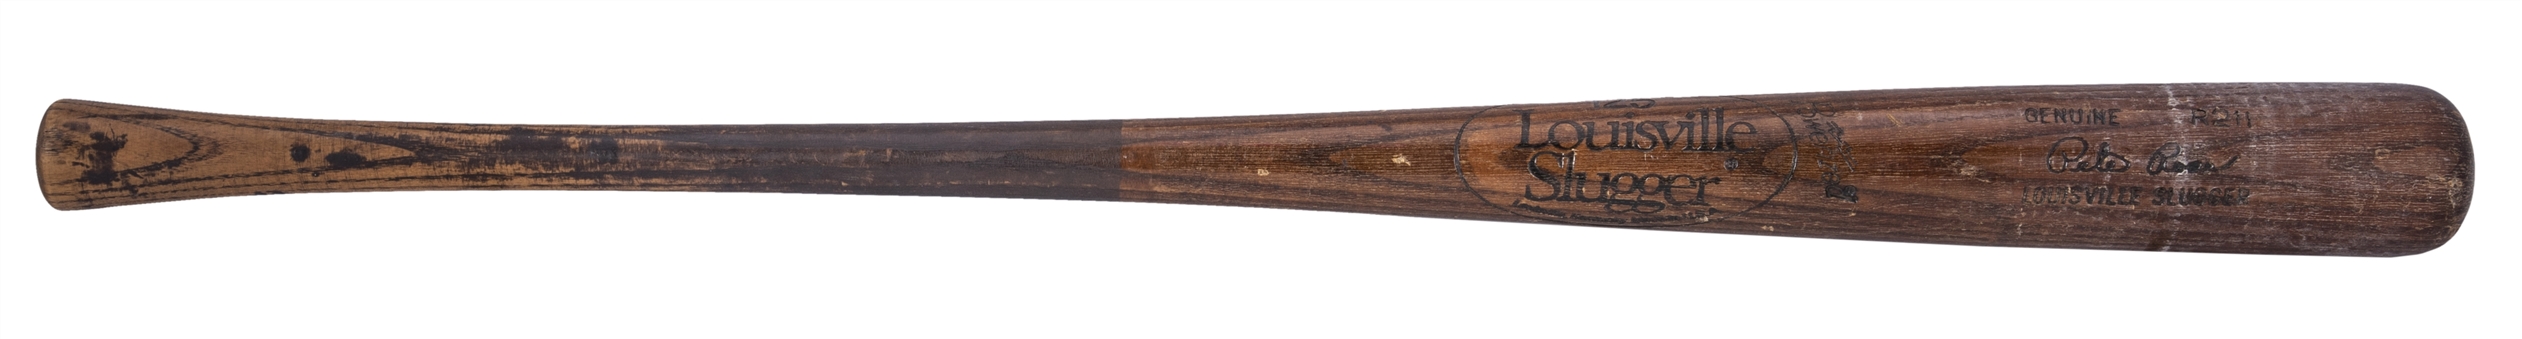 1980 Pete Rose Game Used Louisville Slugger R211 Model Bat (PSA/DNA GU 9.5)